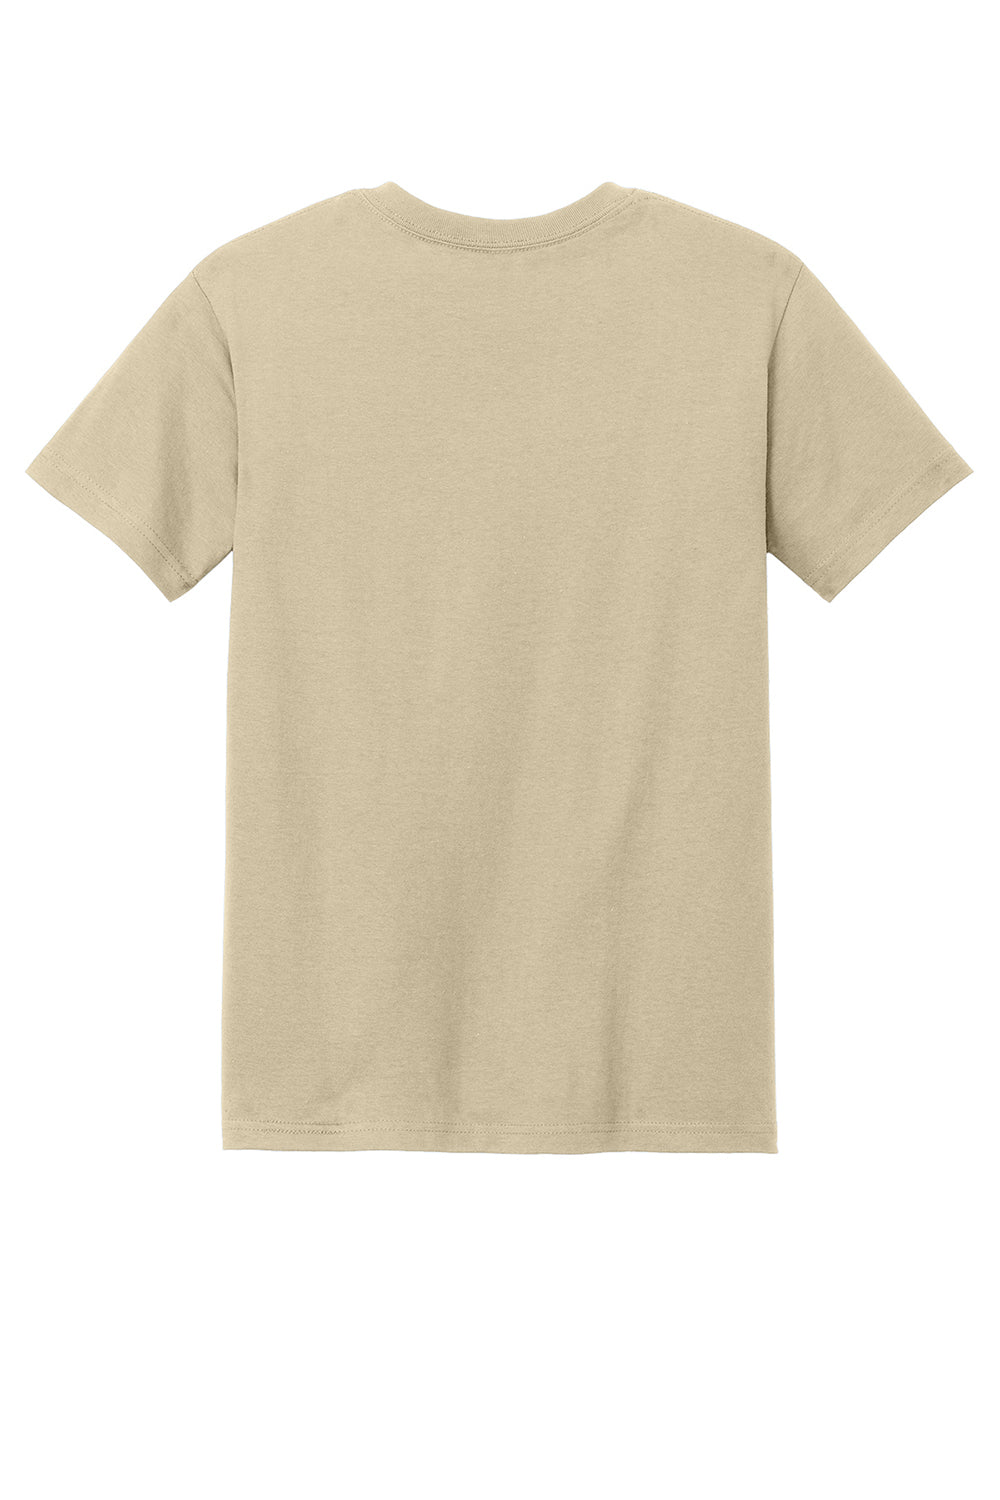 American Apparel 1301/AL1301 Mens Short Sleeve Crewneck T-Shirt Sand Flat Back